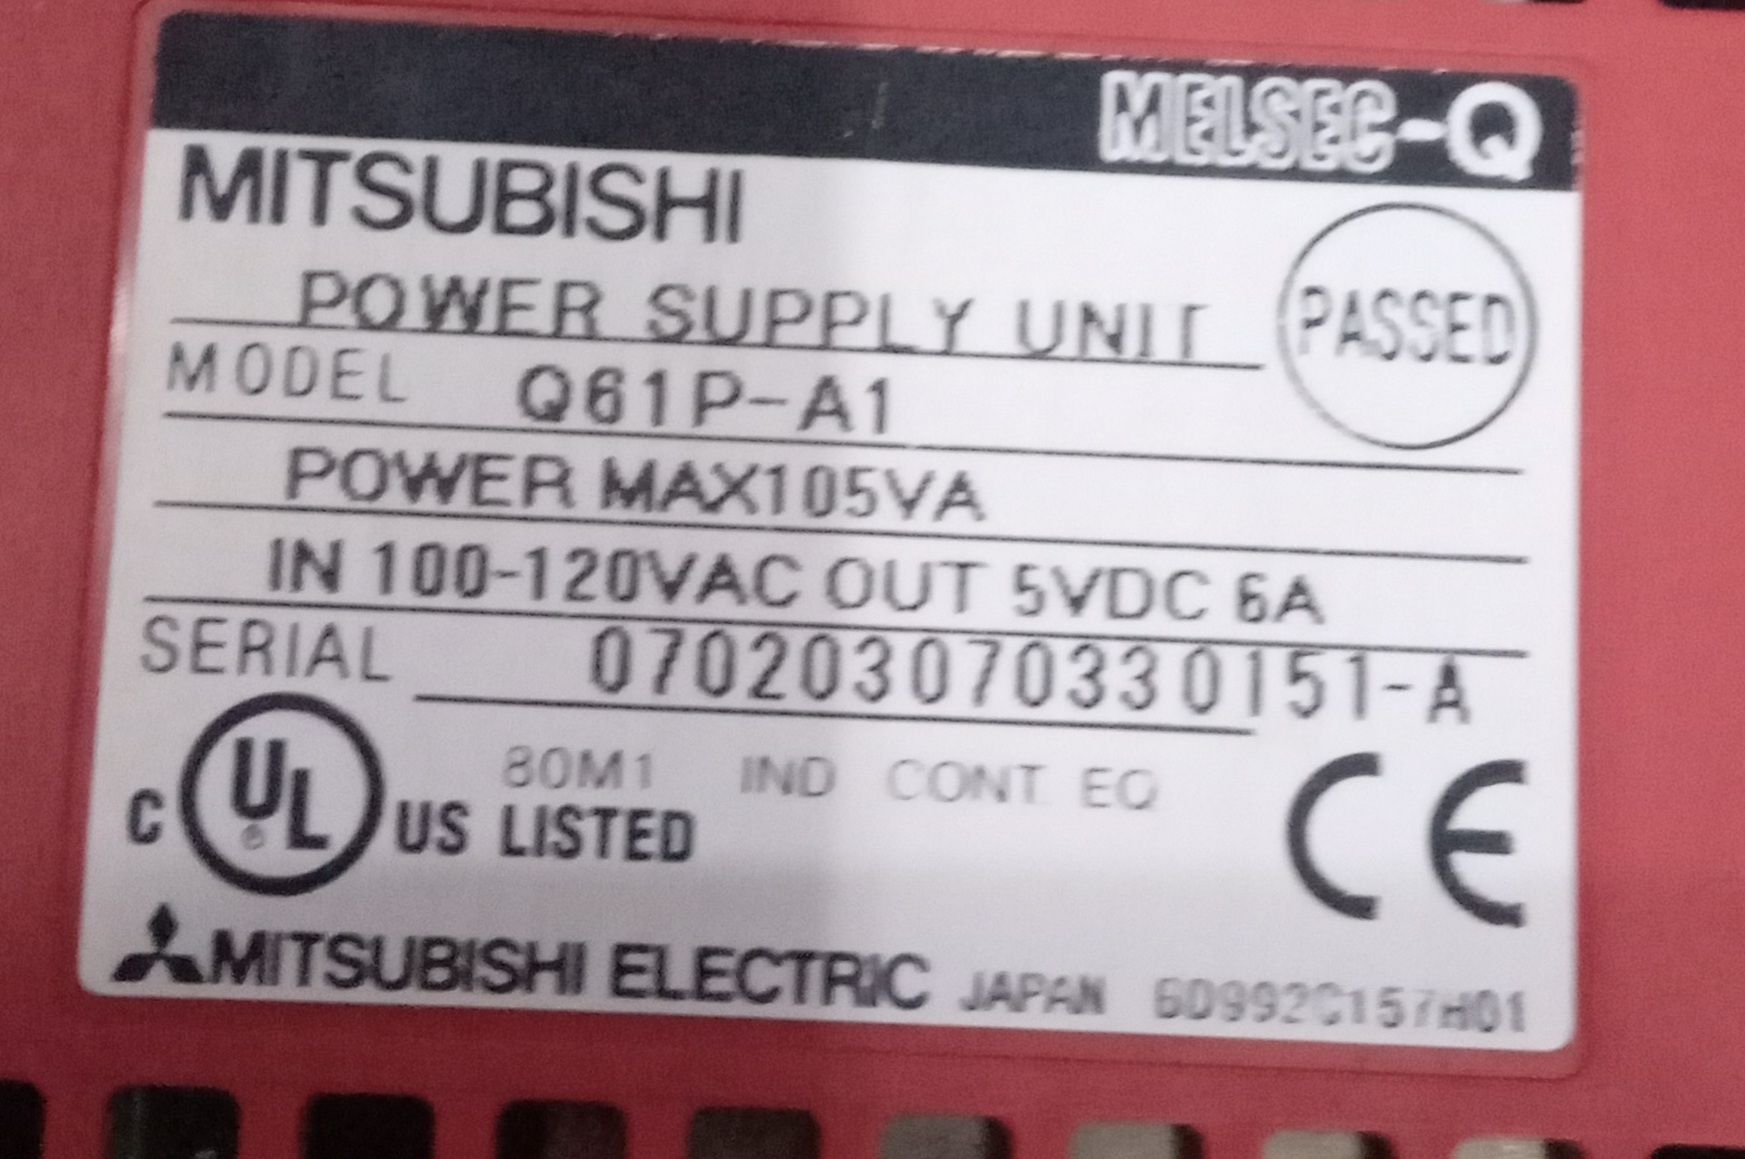 MITSUBISHI Power Supply Unit Q61P-A1